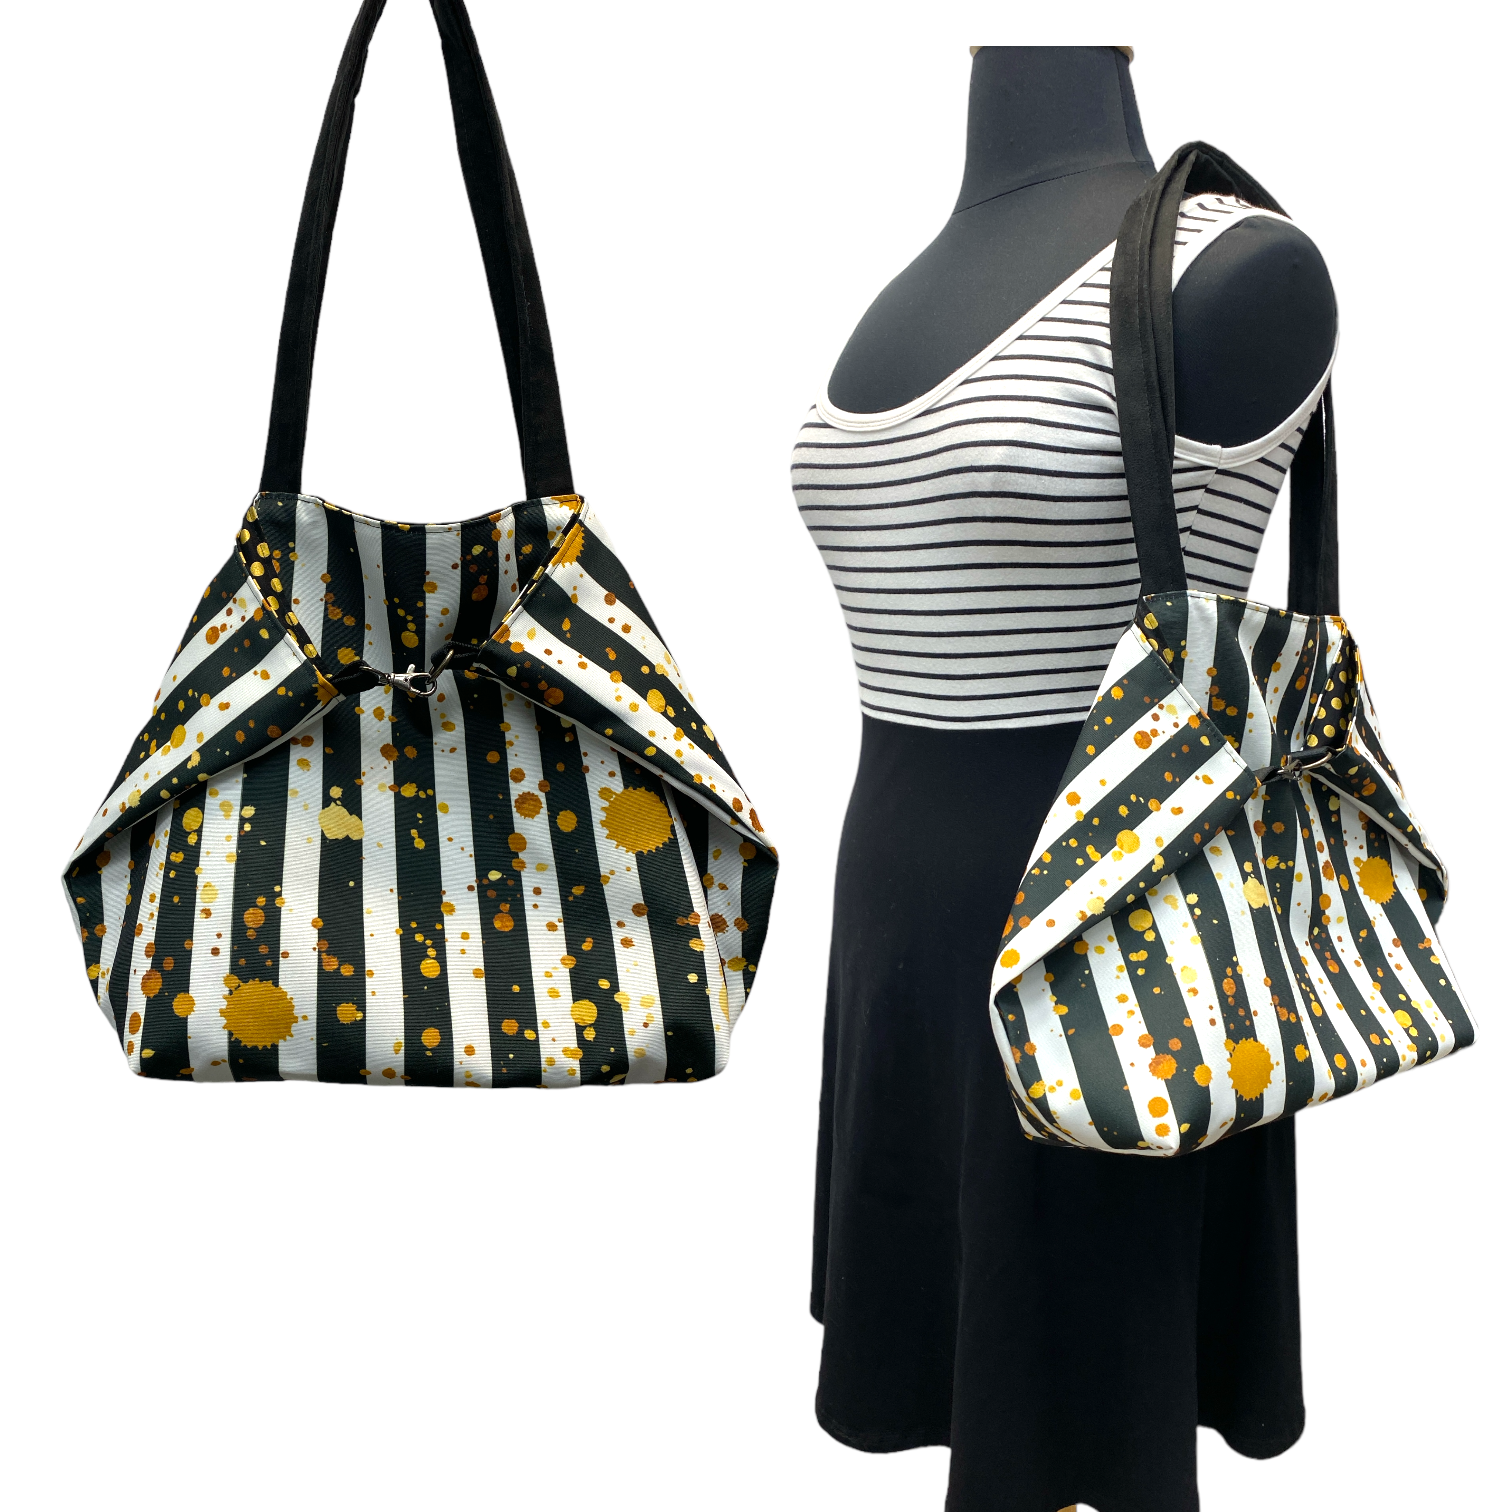 Simple Sack TOTE - Stripes Black/White/Gold